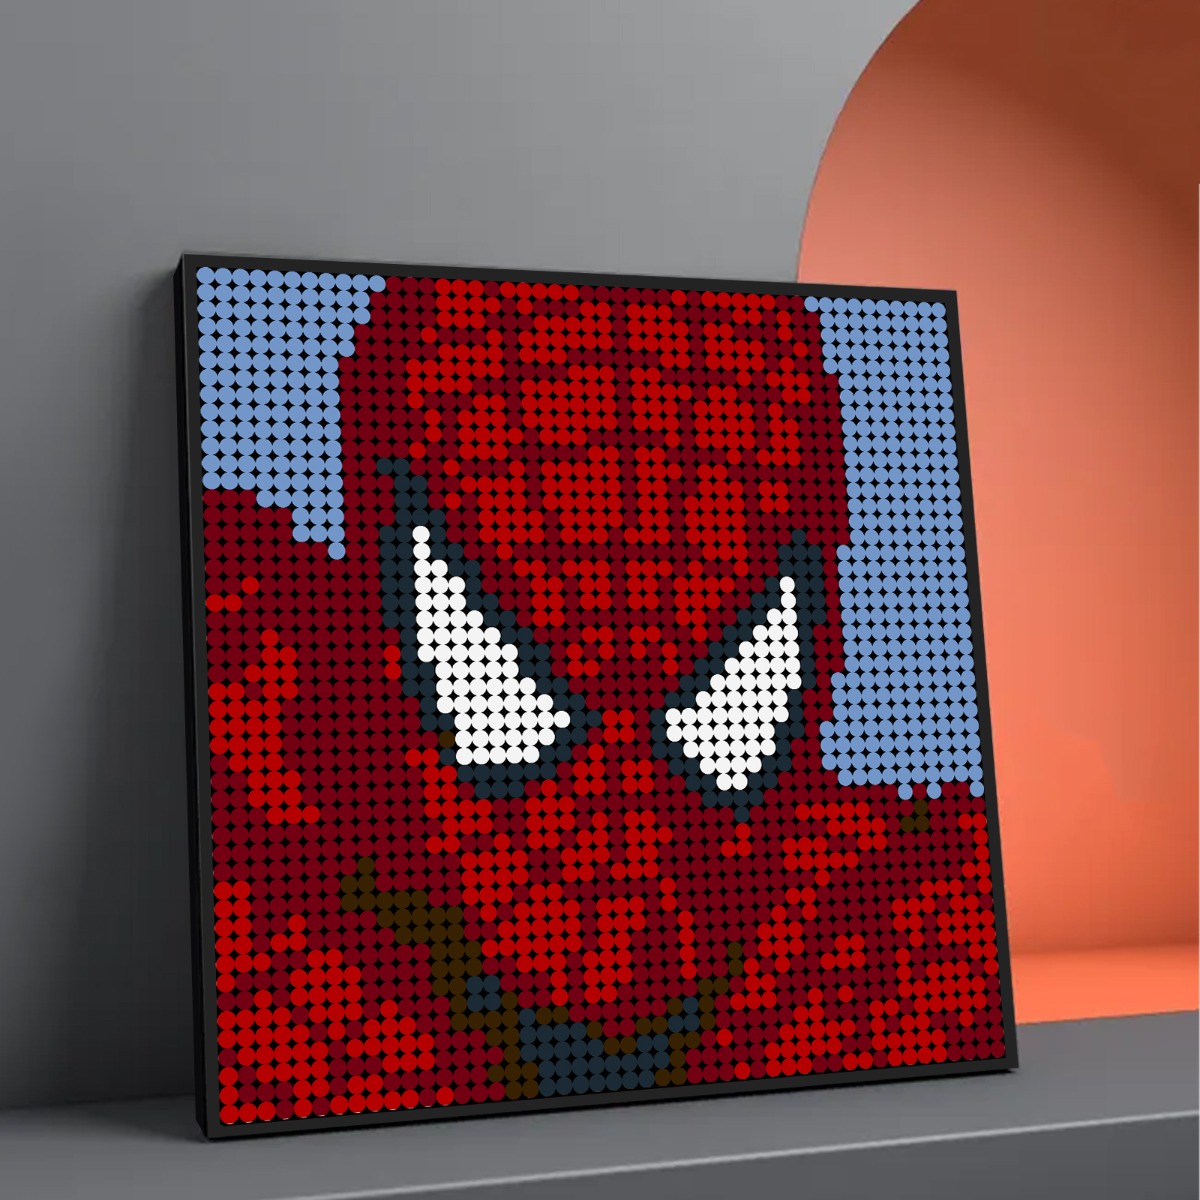 moc 90148 spiderman pixel art movie moc factory 033641 - LEPIN Germany